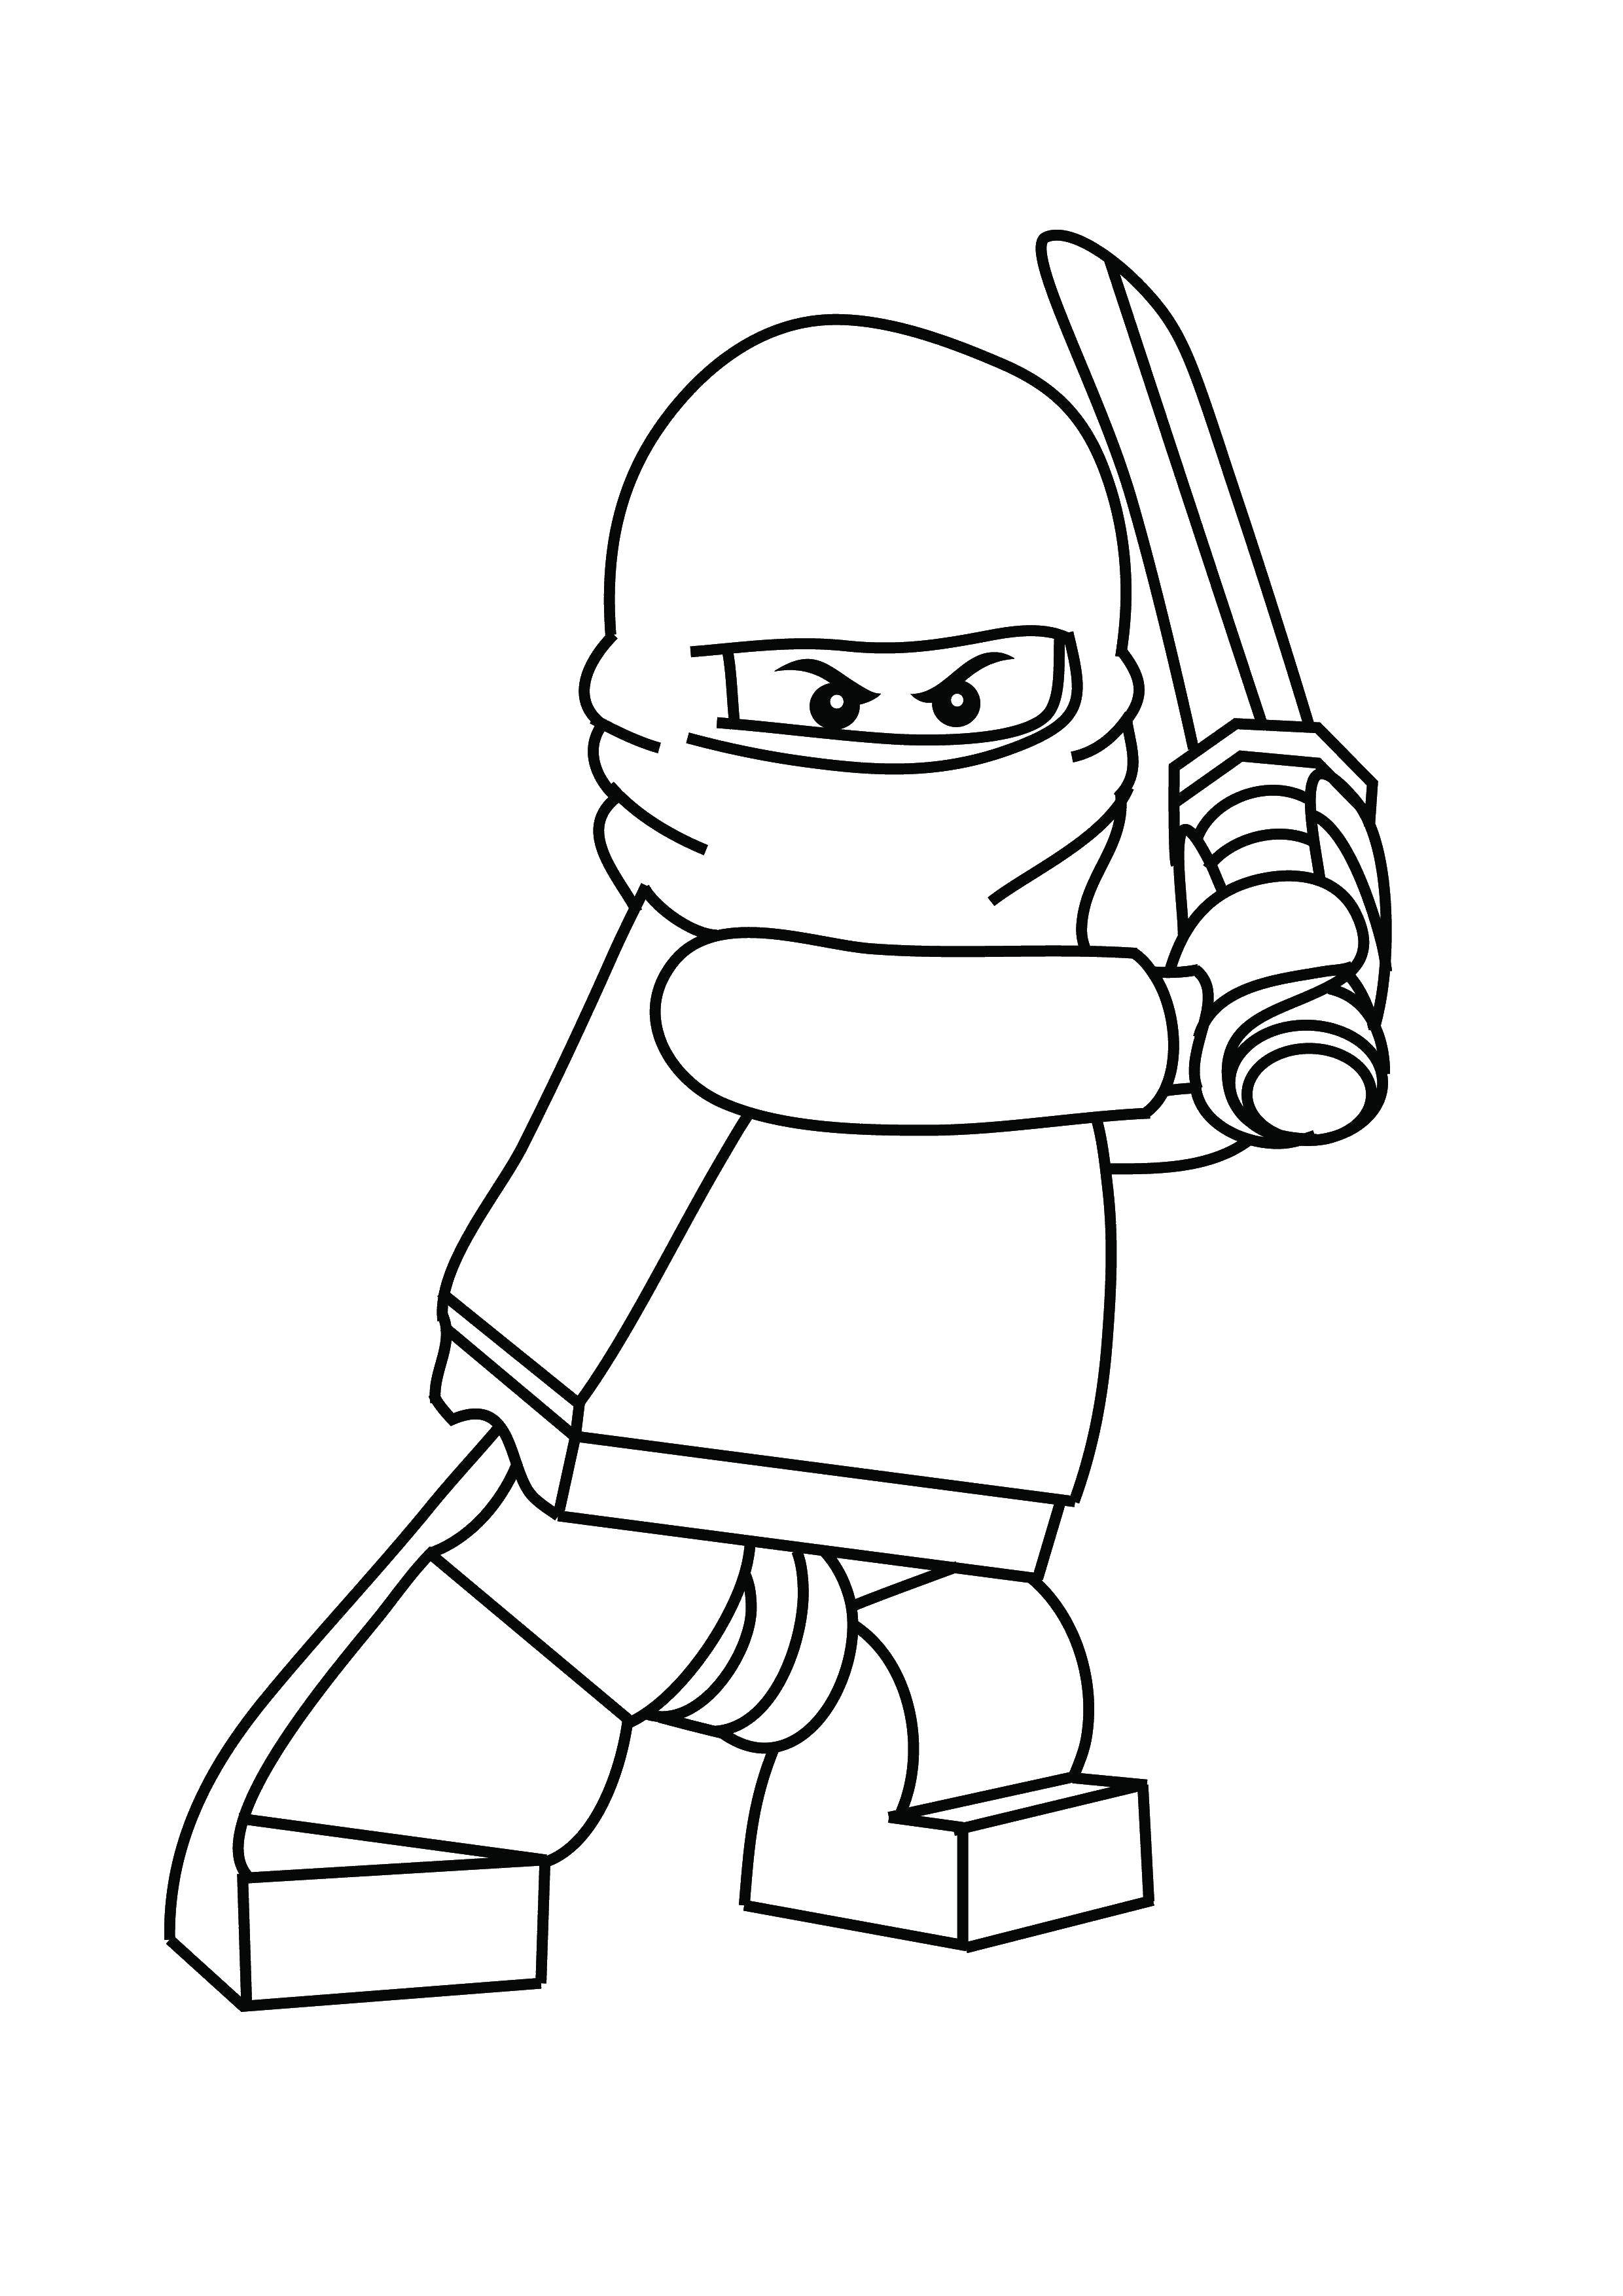 Coloring LEGO ninja with sword. Category LEGO. Tags:  LEGO, ninja.